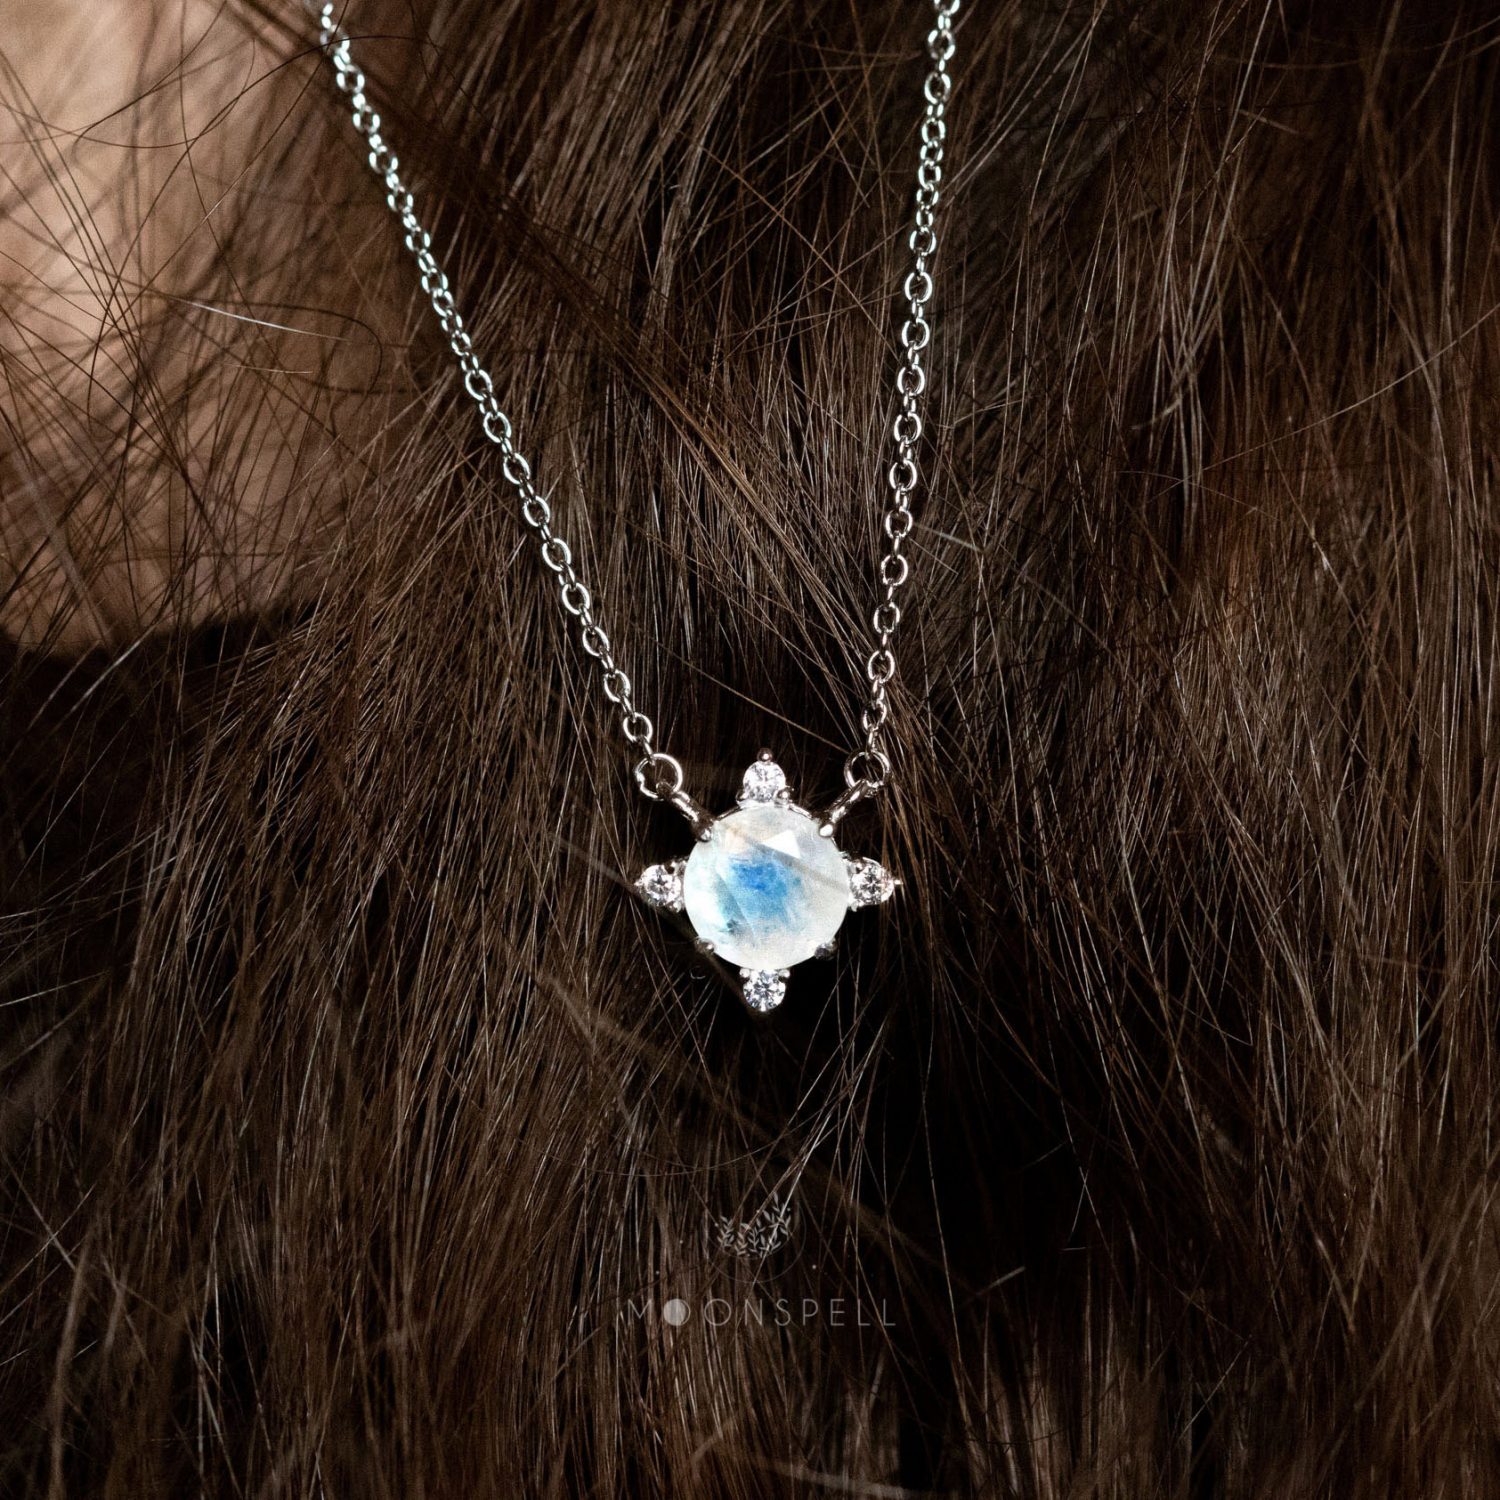 moonstone necklace pendant arya precious fine jewelry sterling silver gift for her birthday handmade june gemstone birthstone star elegant romantic elvish